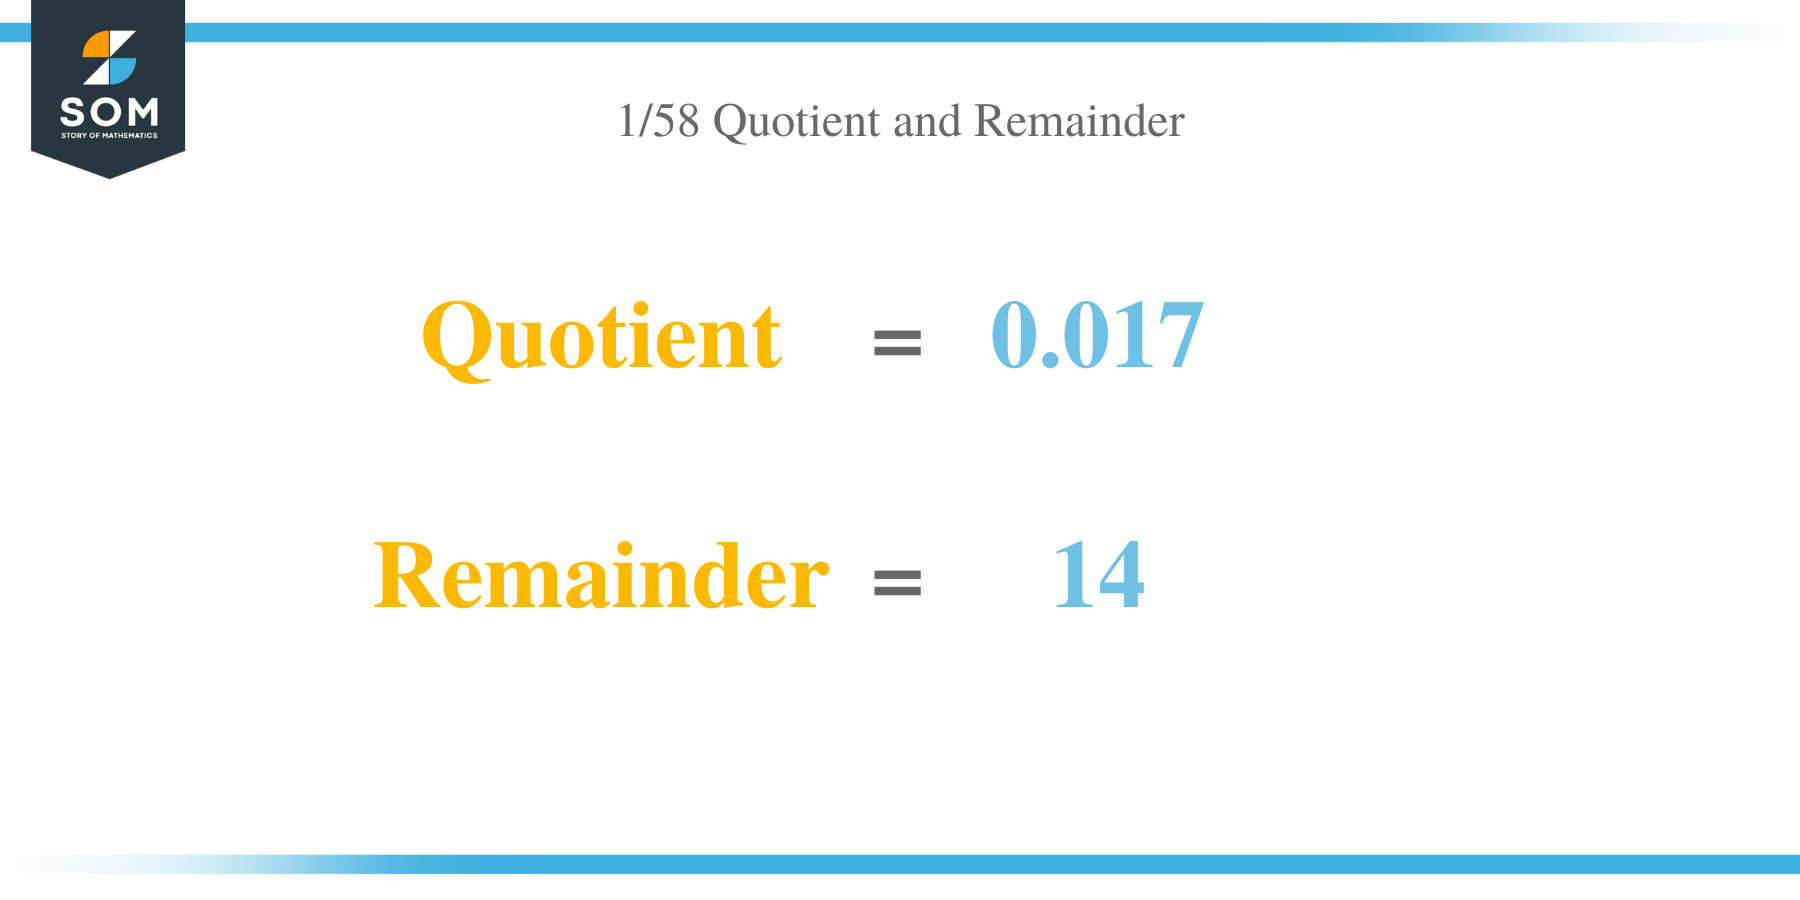 Quotient and Remainder of 1 per 58